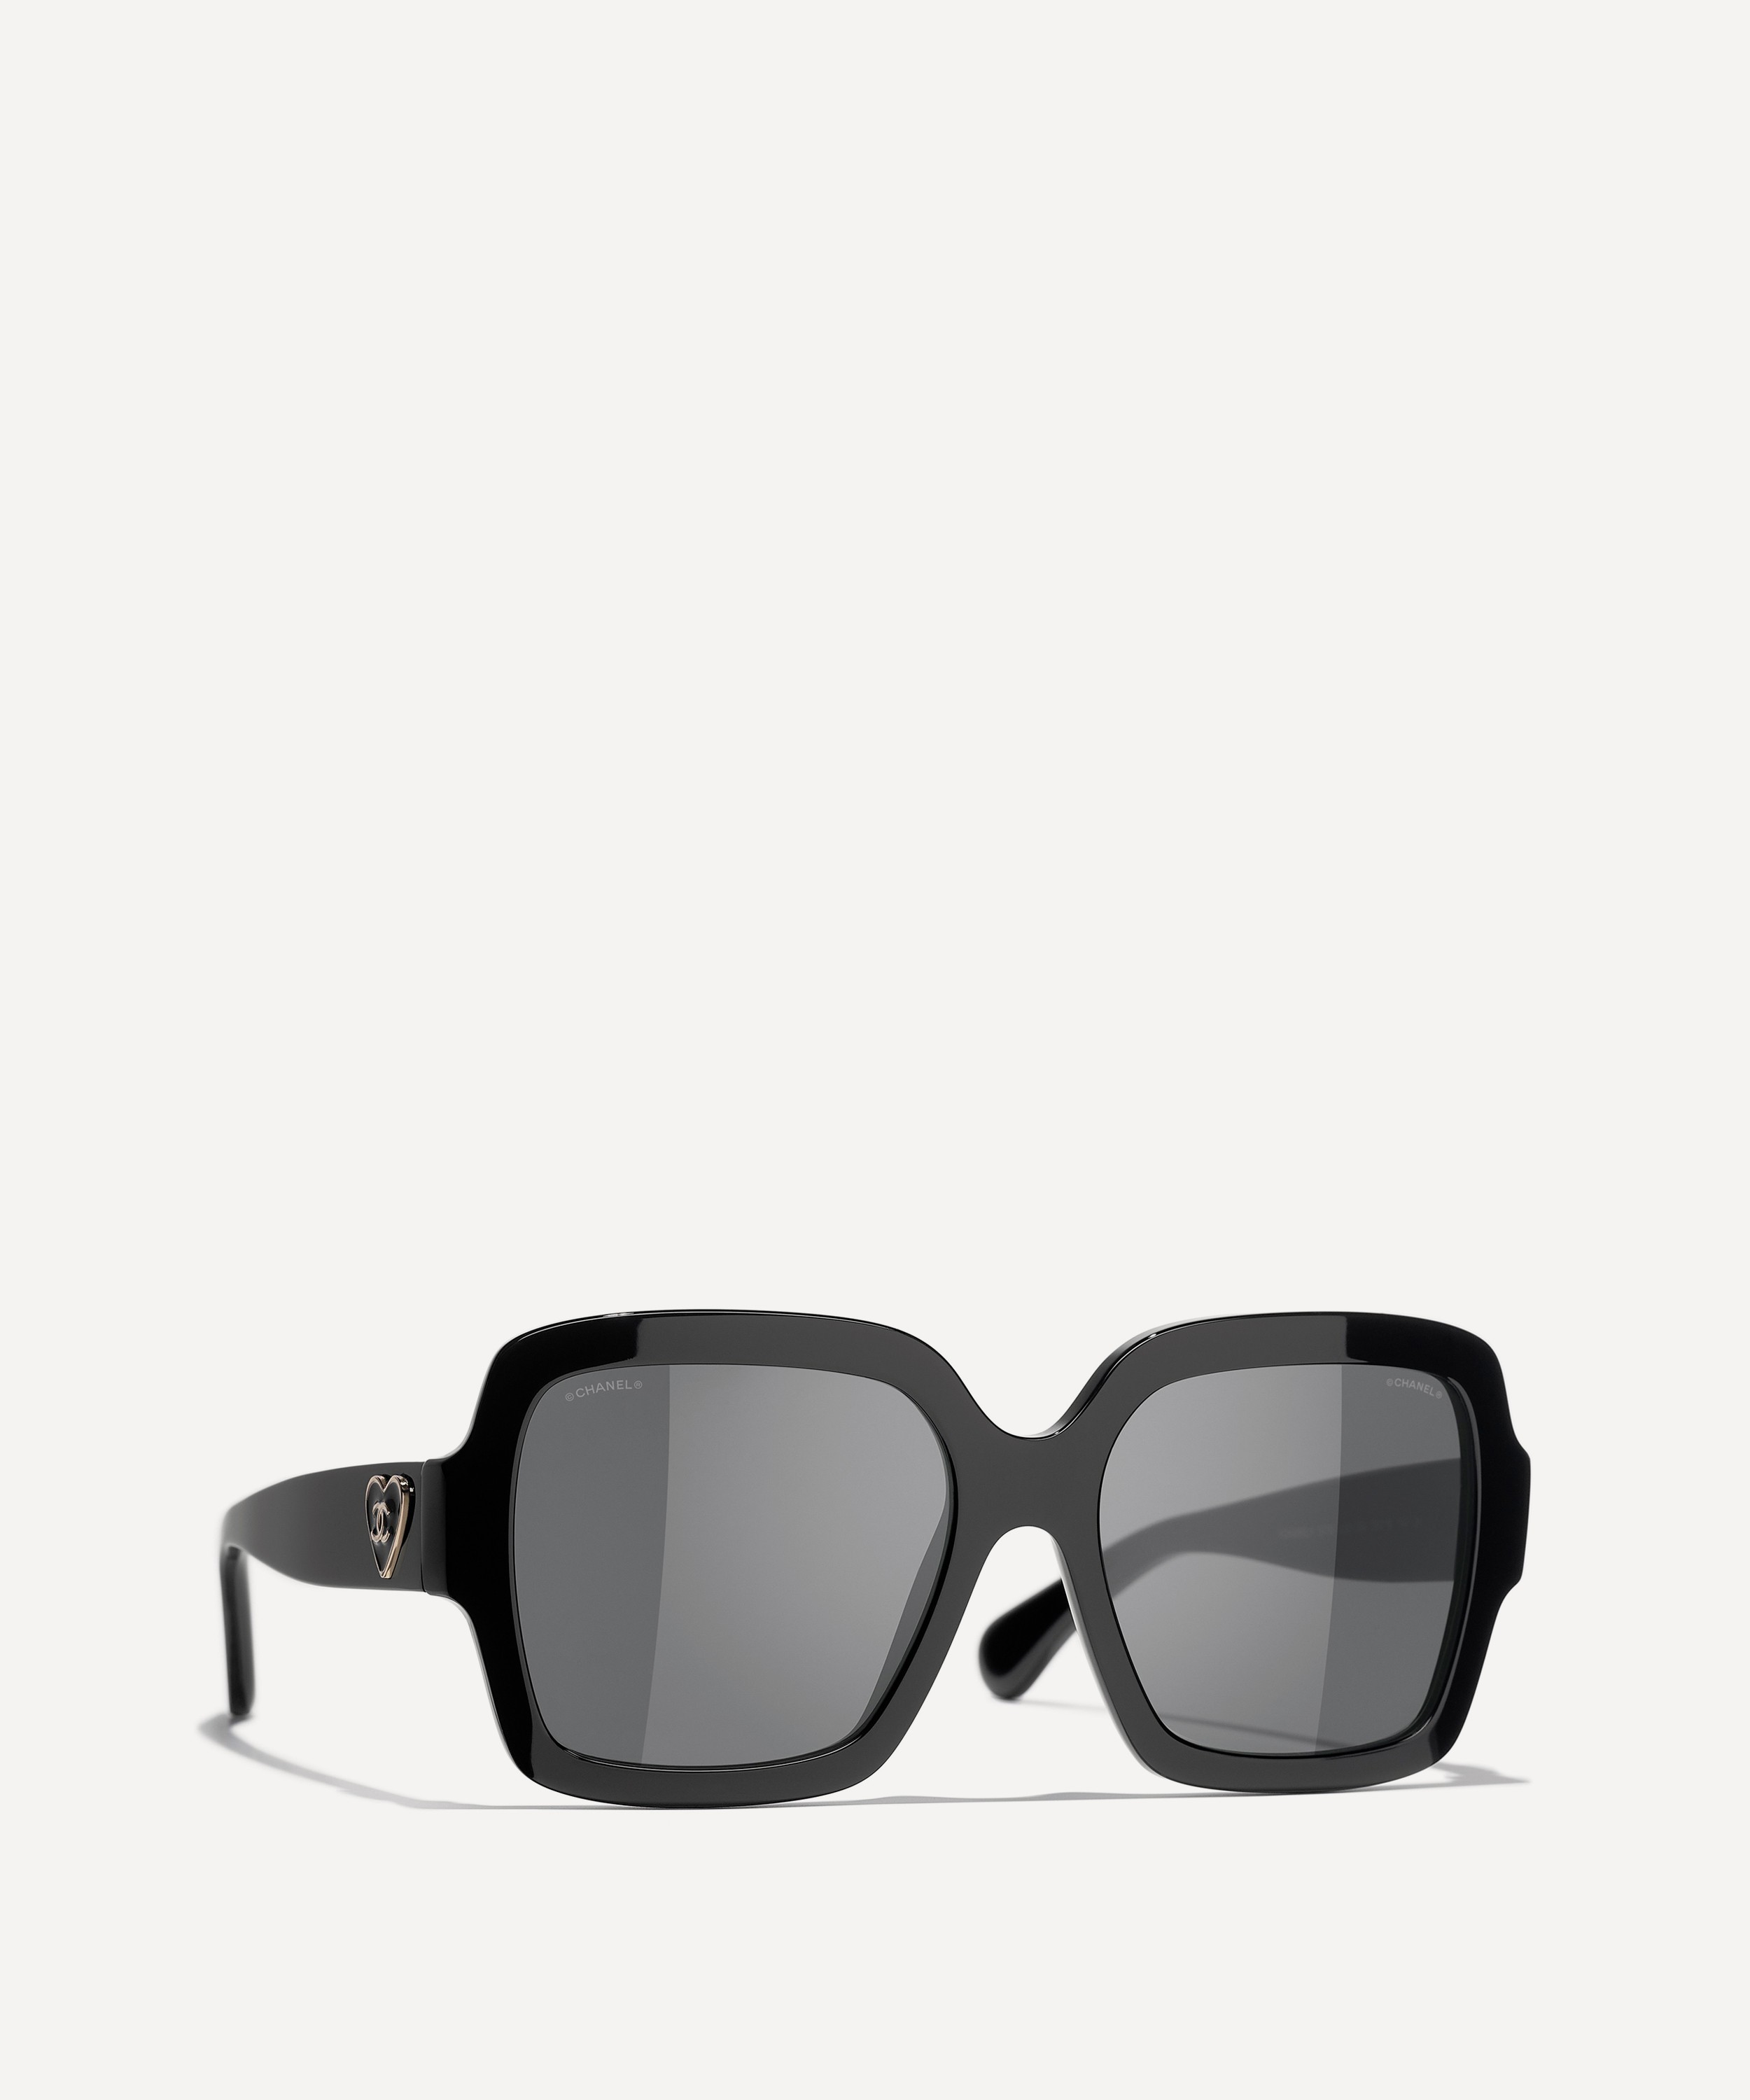 Chanel Women's Oversized Square Sunglasses